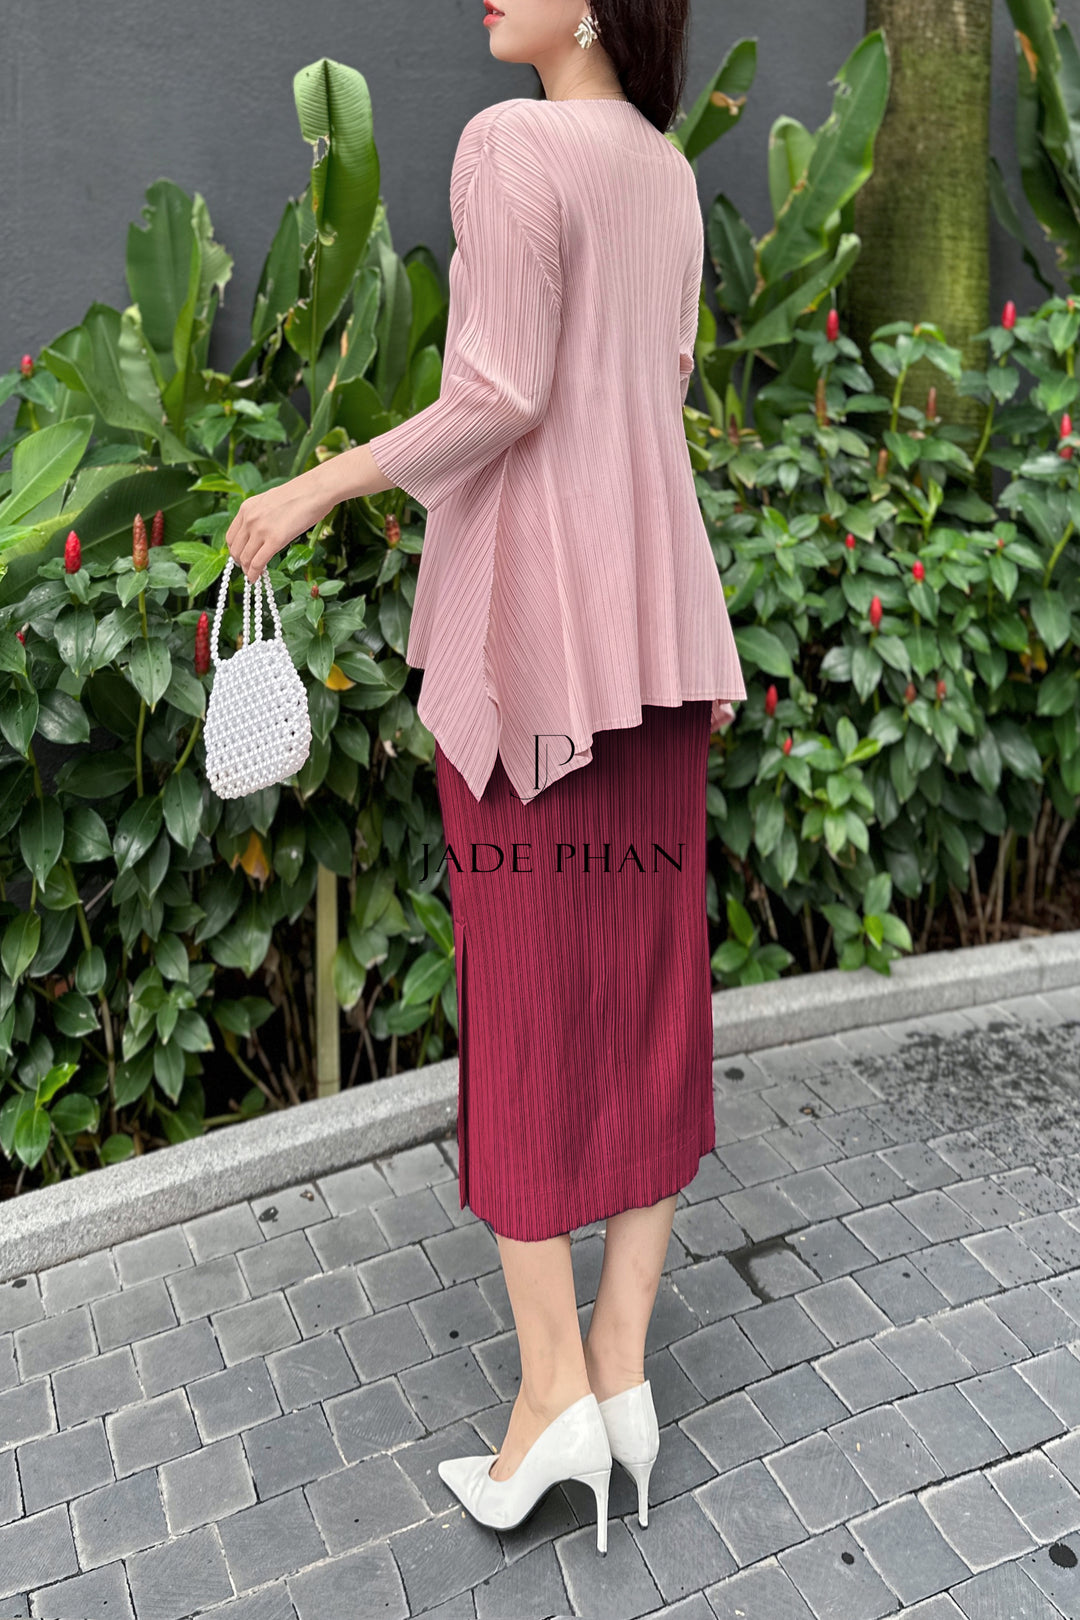 FANNY Top Hồng & AUDORA Skirt Đỏ